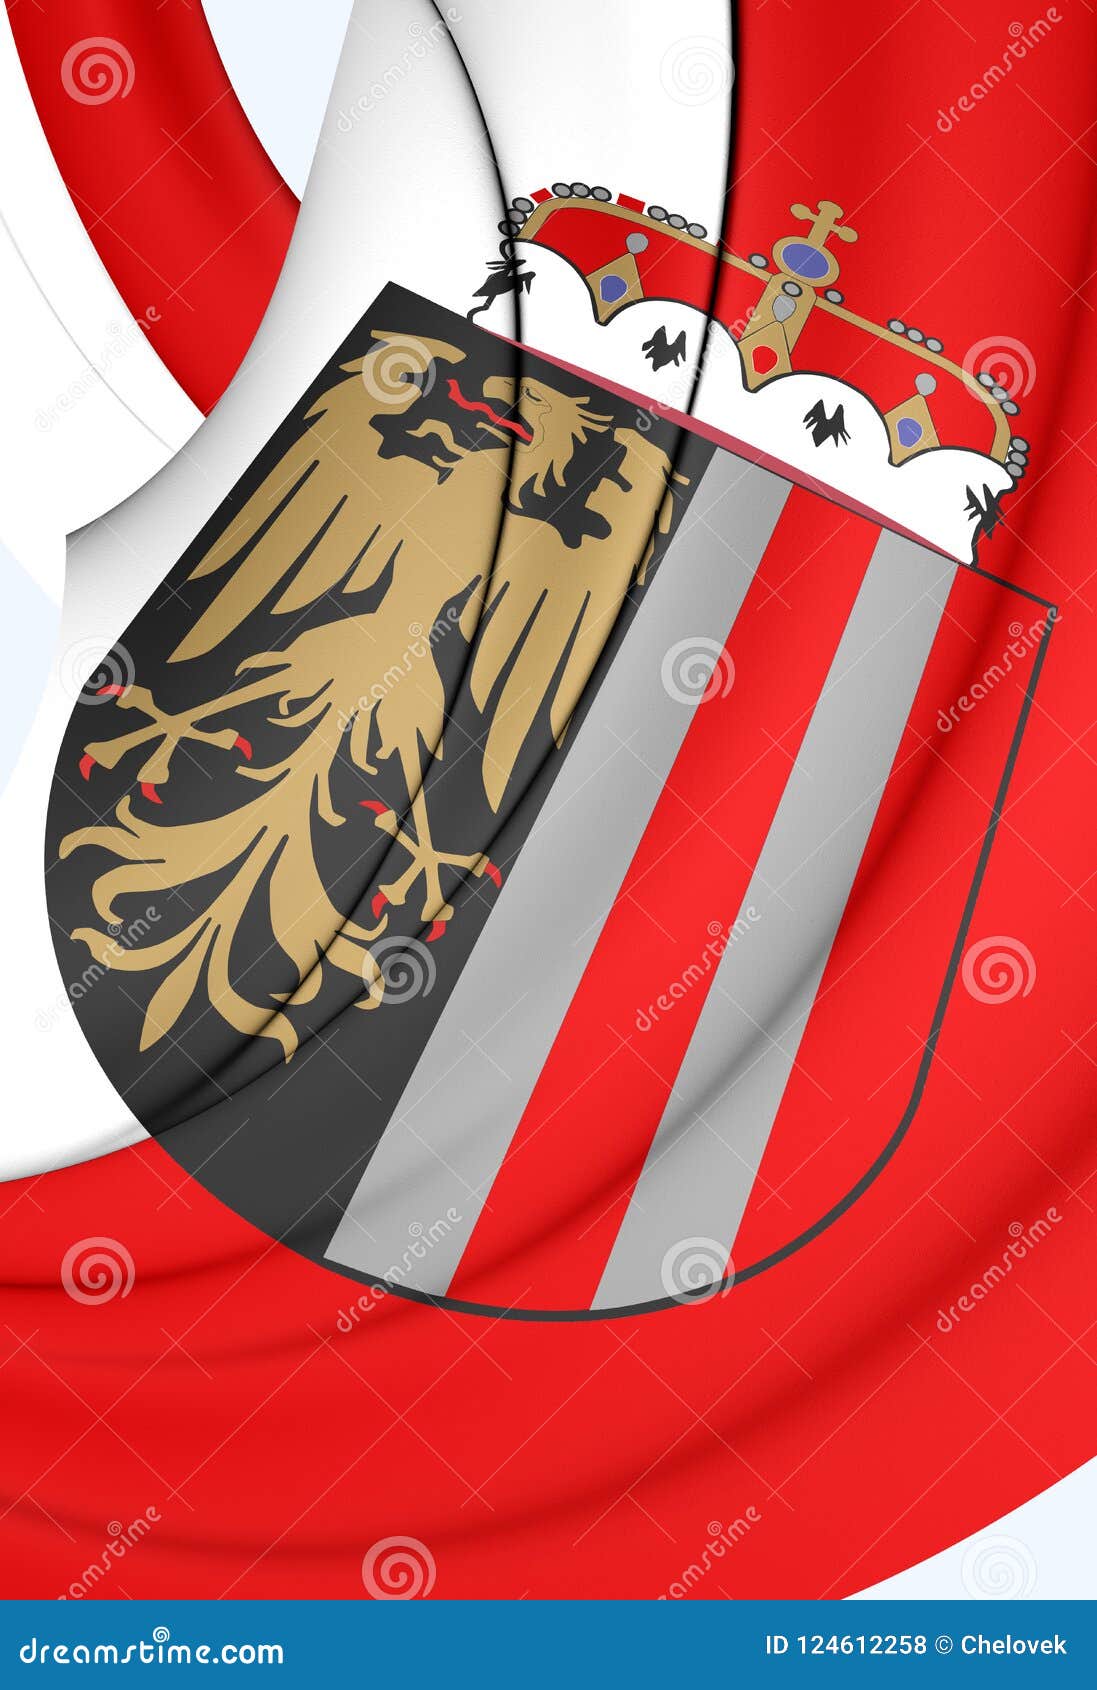 3d flag of upper austria, oberosterreich.